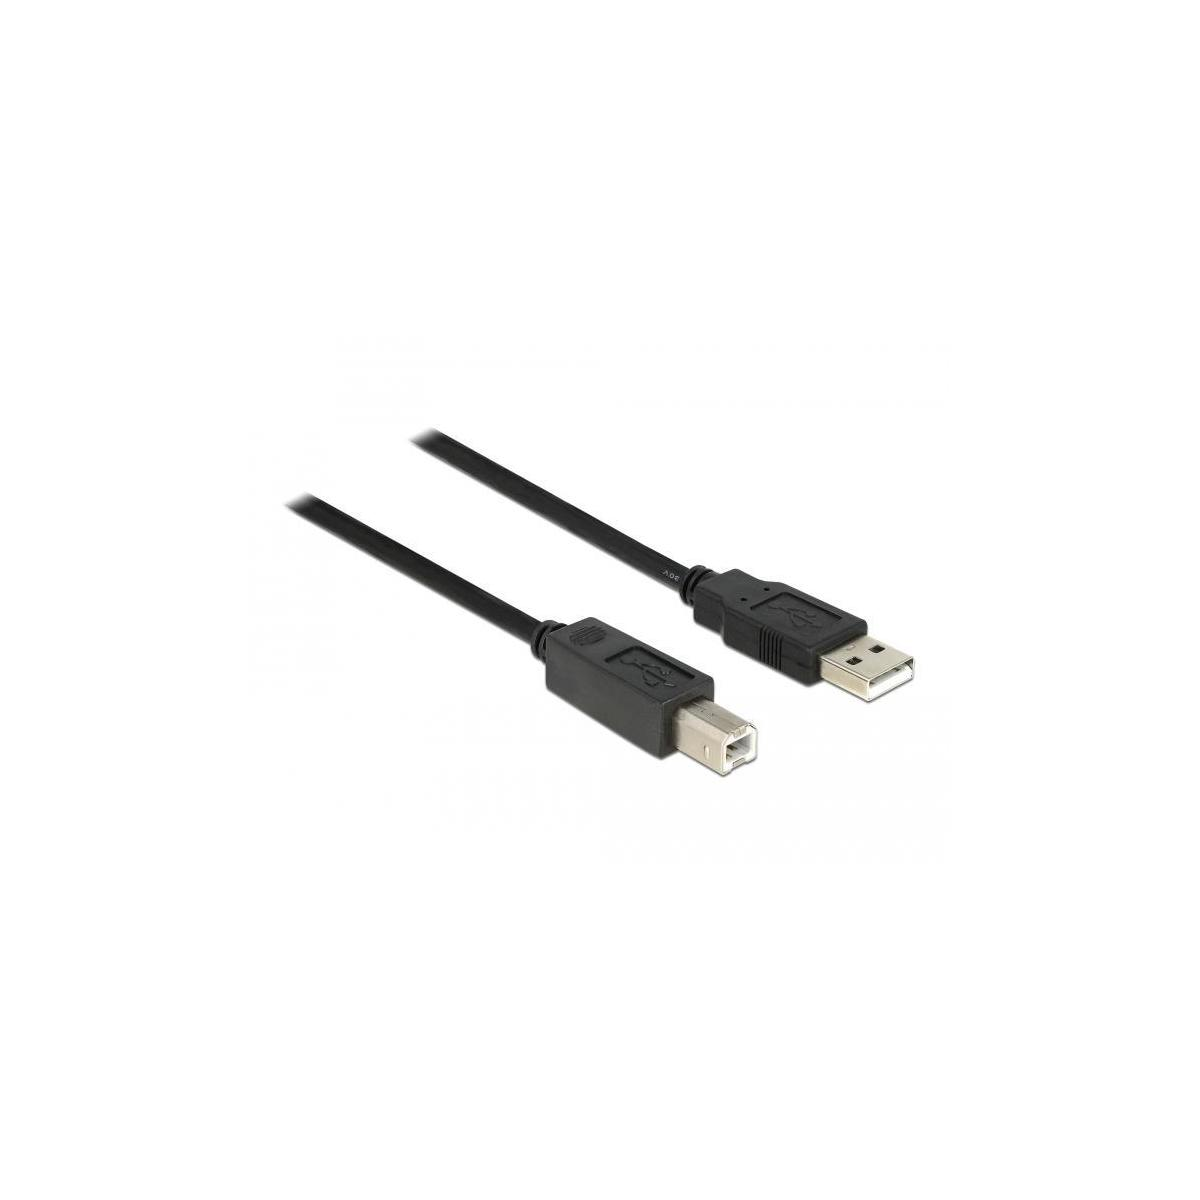 DELOCK 82915 USB Kabel, Schwarz